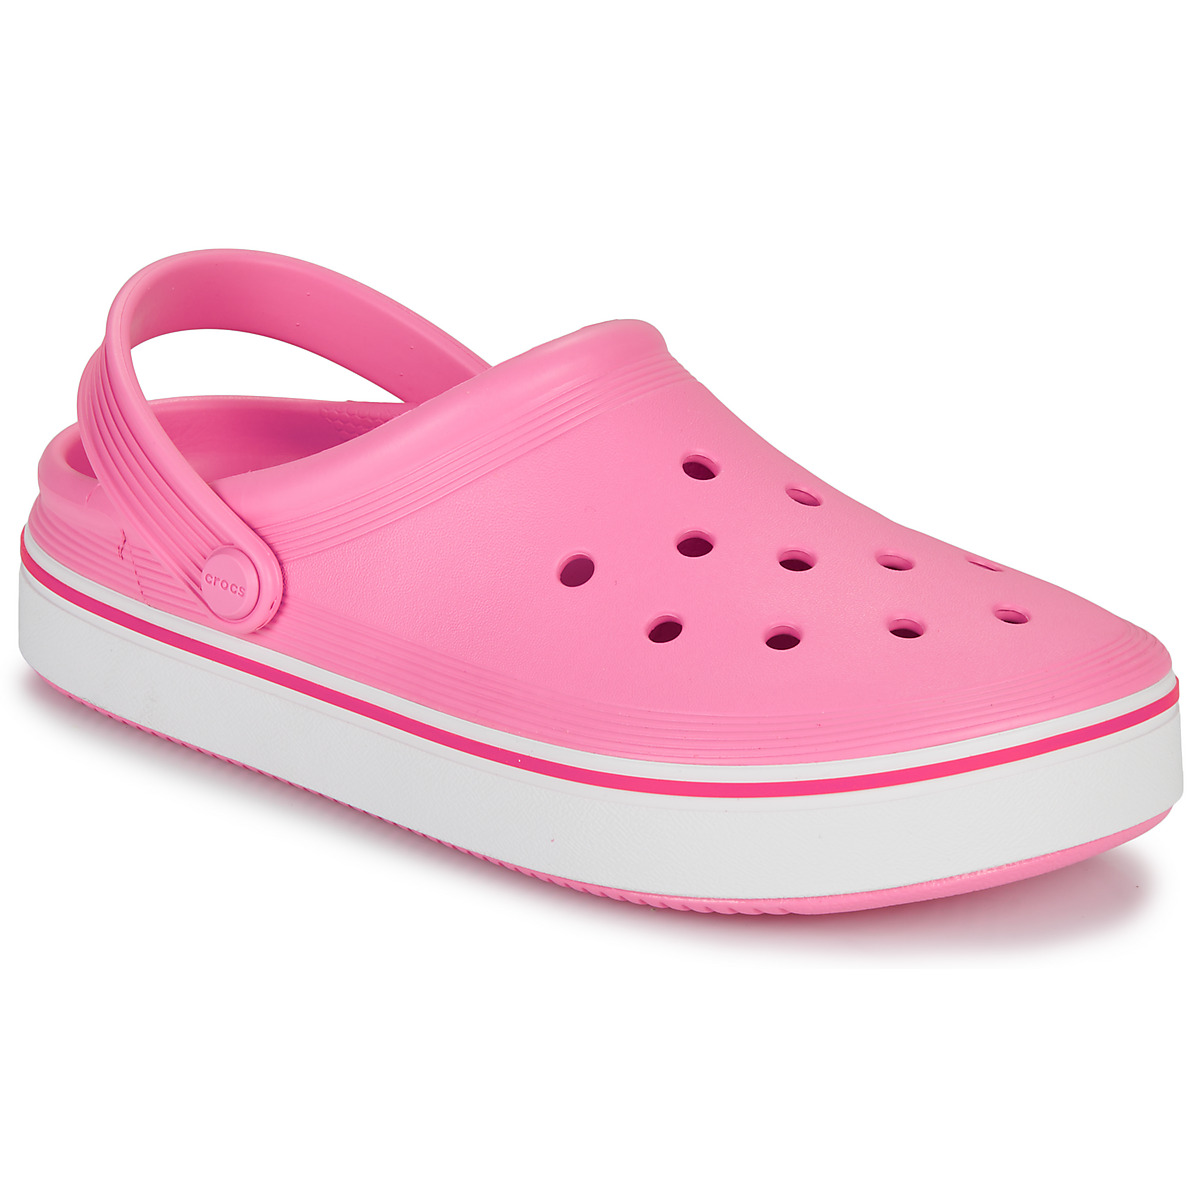 Zapatos Zuecos (Clogs) Crocs Crocband Clean Clog Rosa